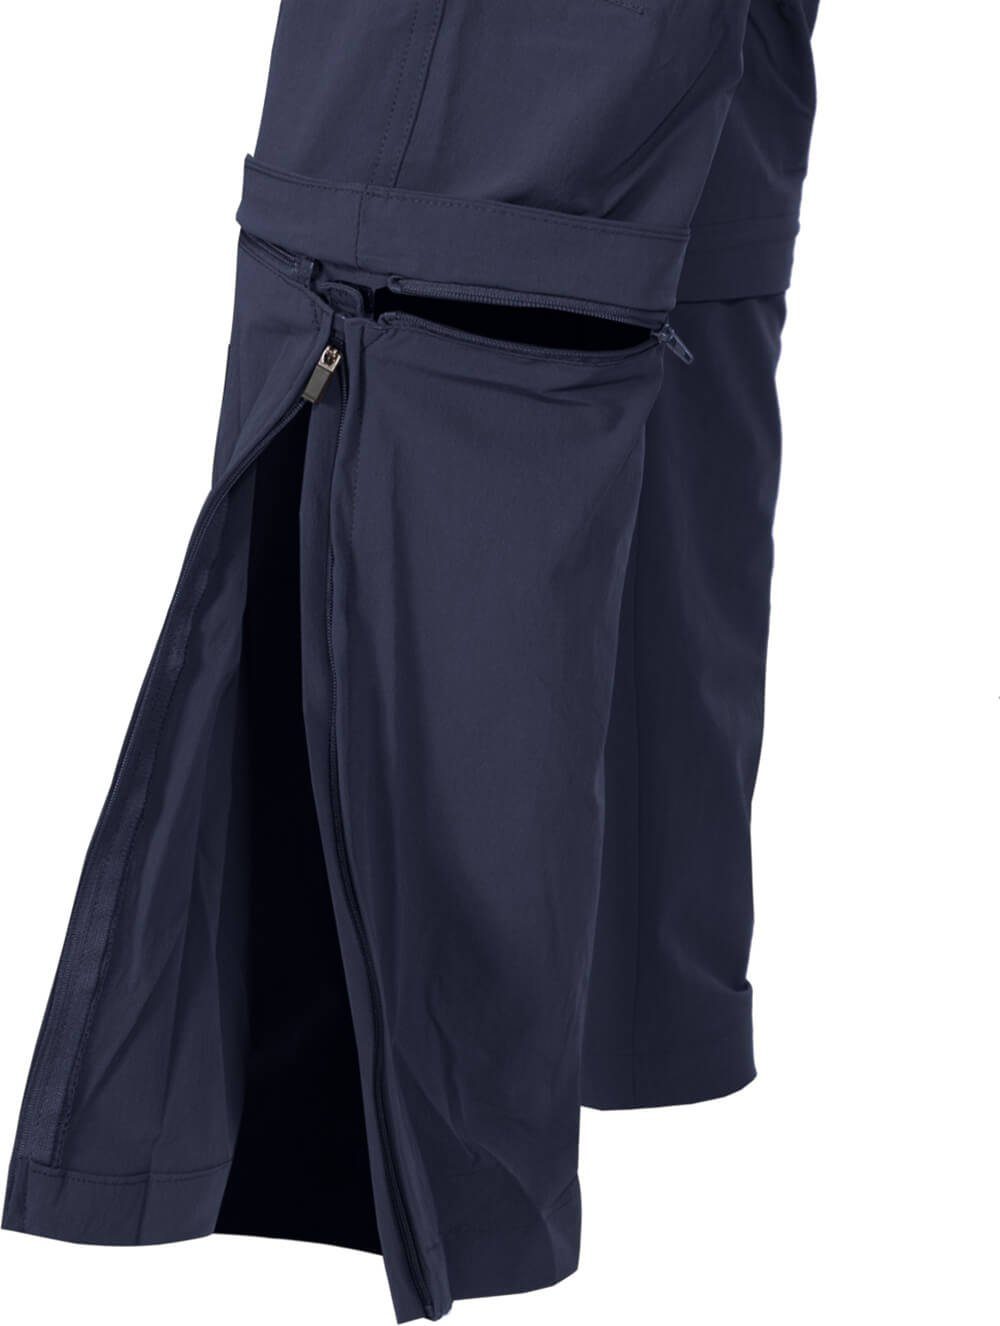 Normalgrößen, peacoat Bergson T-ZIPP Zipp-Off Doppel Wanderhose, blau Zip-off-Hose vielseitig, pflegeleicht, QUEENSLAND Herren mit